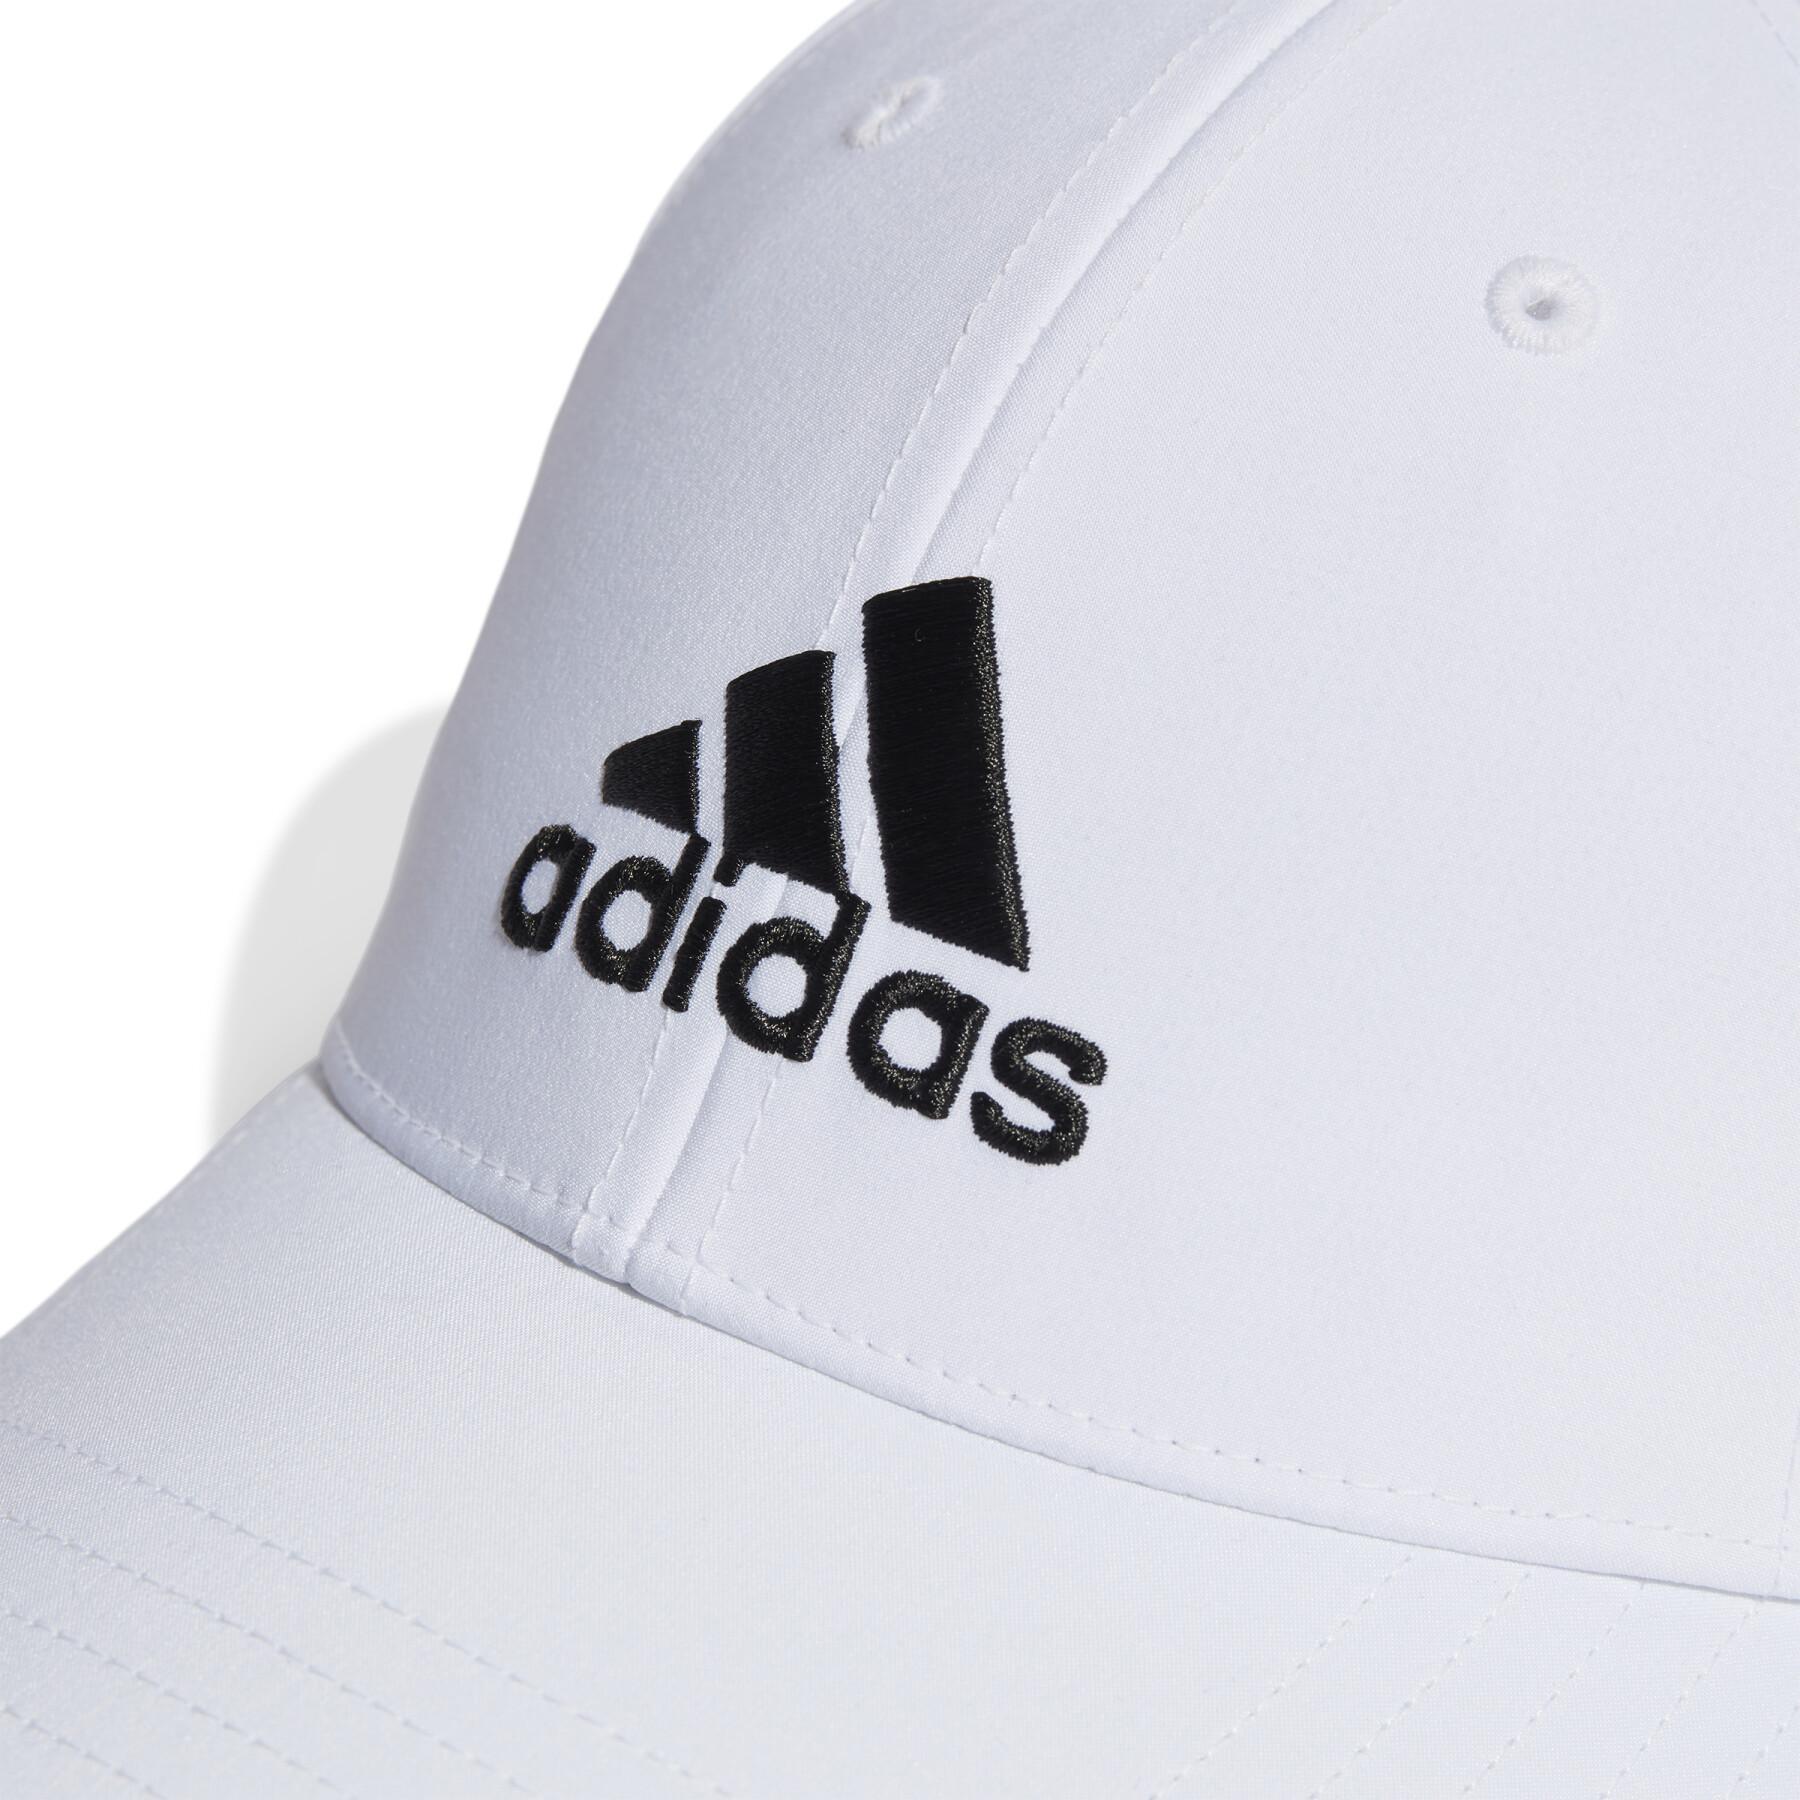 Lightweight children's cap with embroidered logo adidas